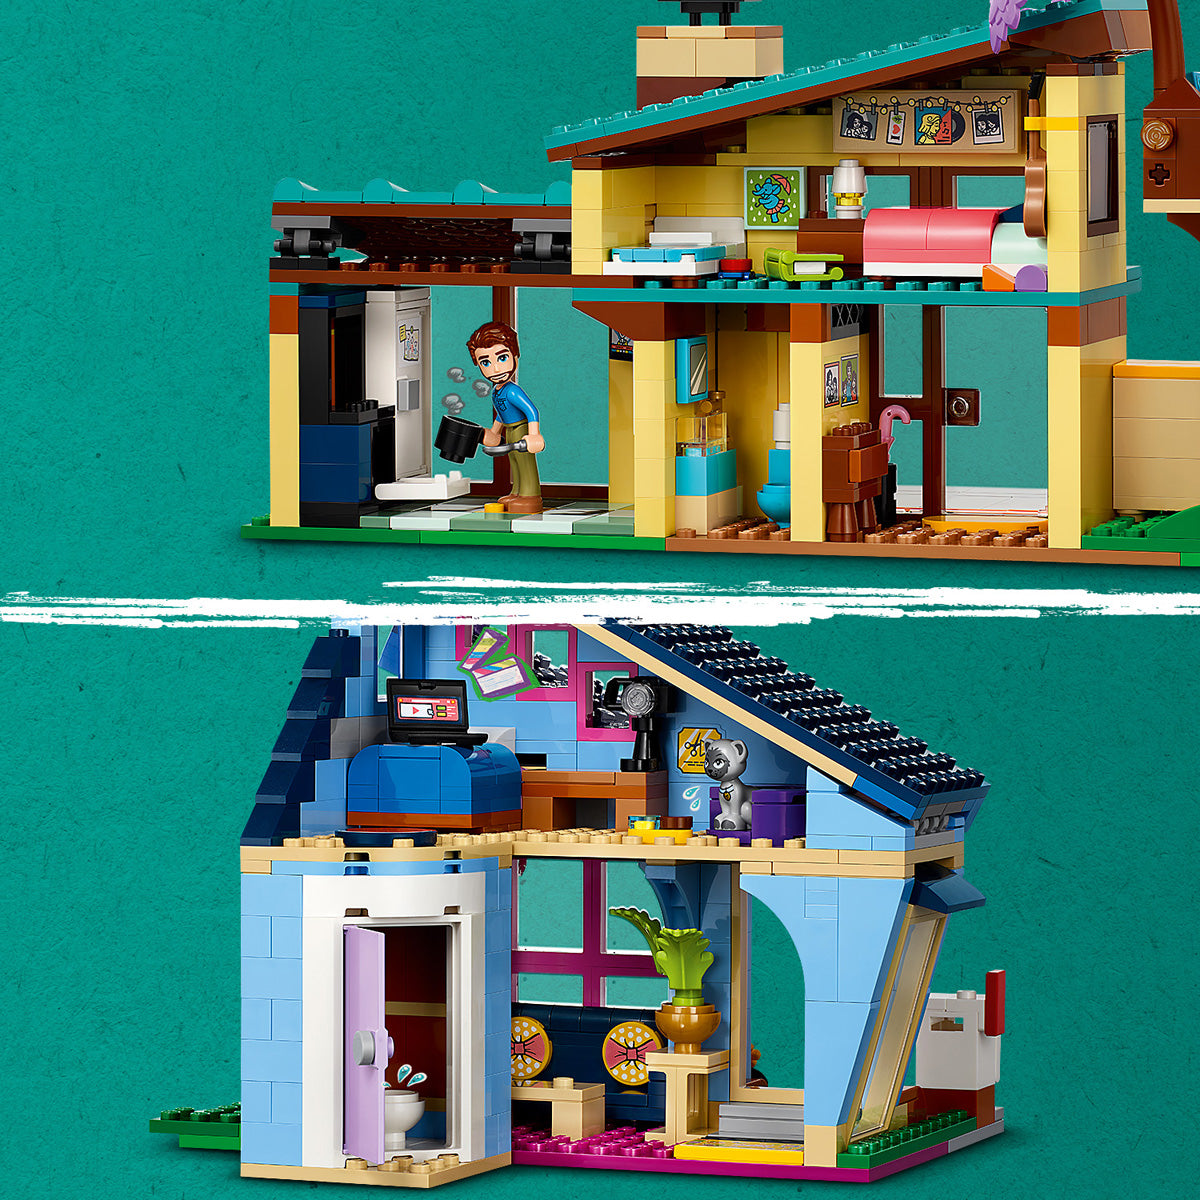 LEGO® Friends - Obiteljske kuće Ollyja i Paisley (42620)